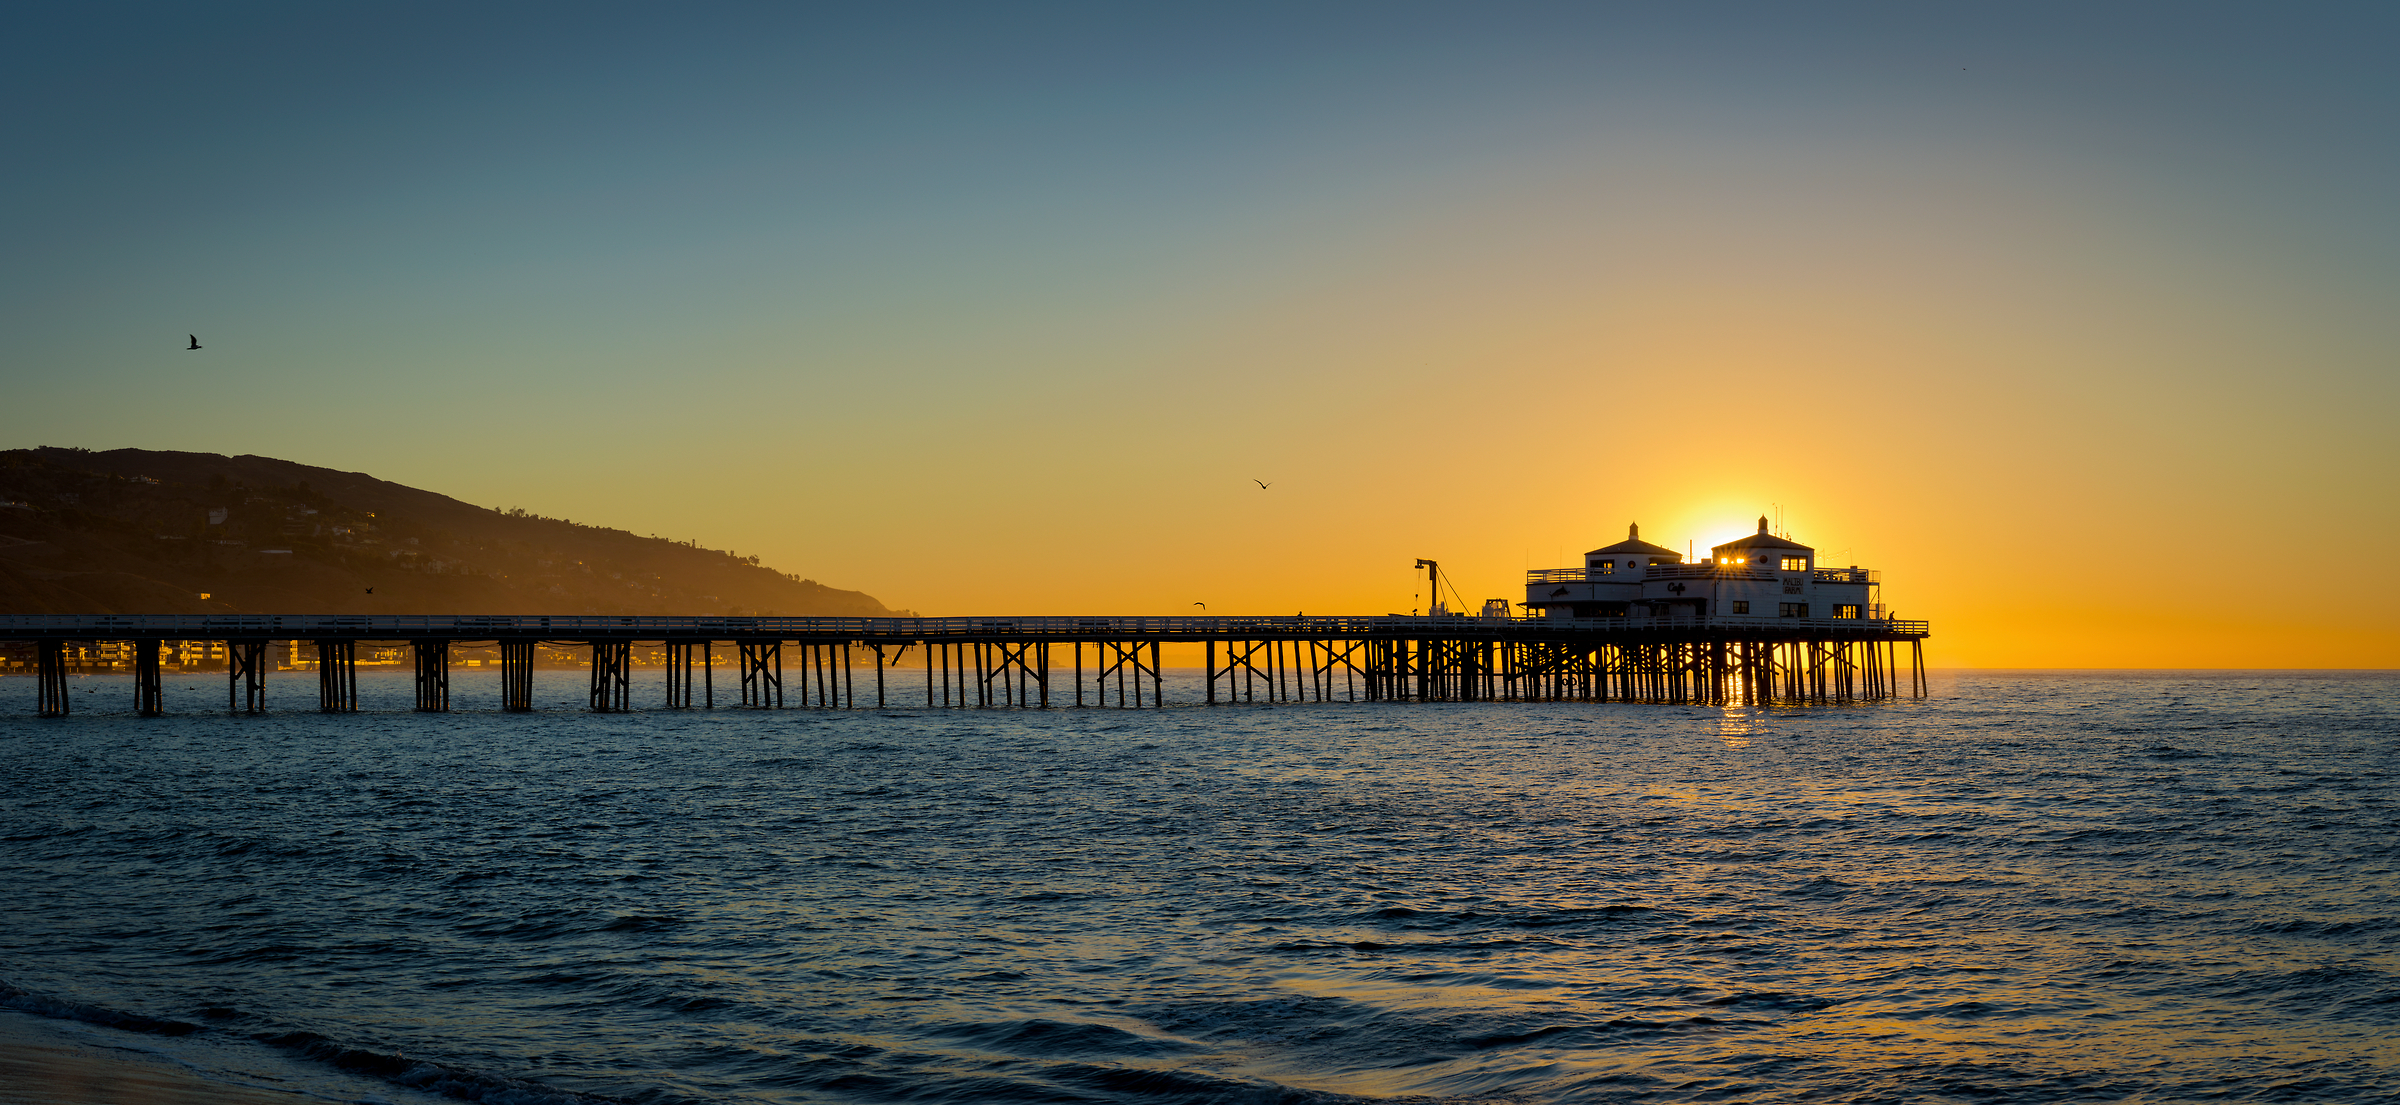 112 megapixels! A very high resolution, large-format VAST photo of the Malibu Pier at sunrise created by Jim Tarpo in Malibu, California